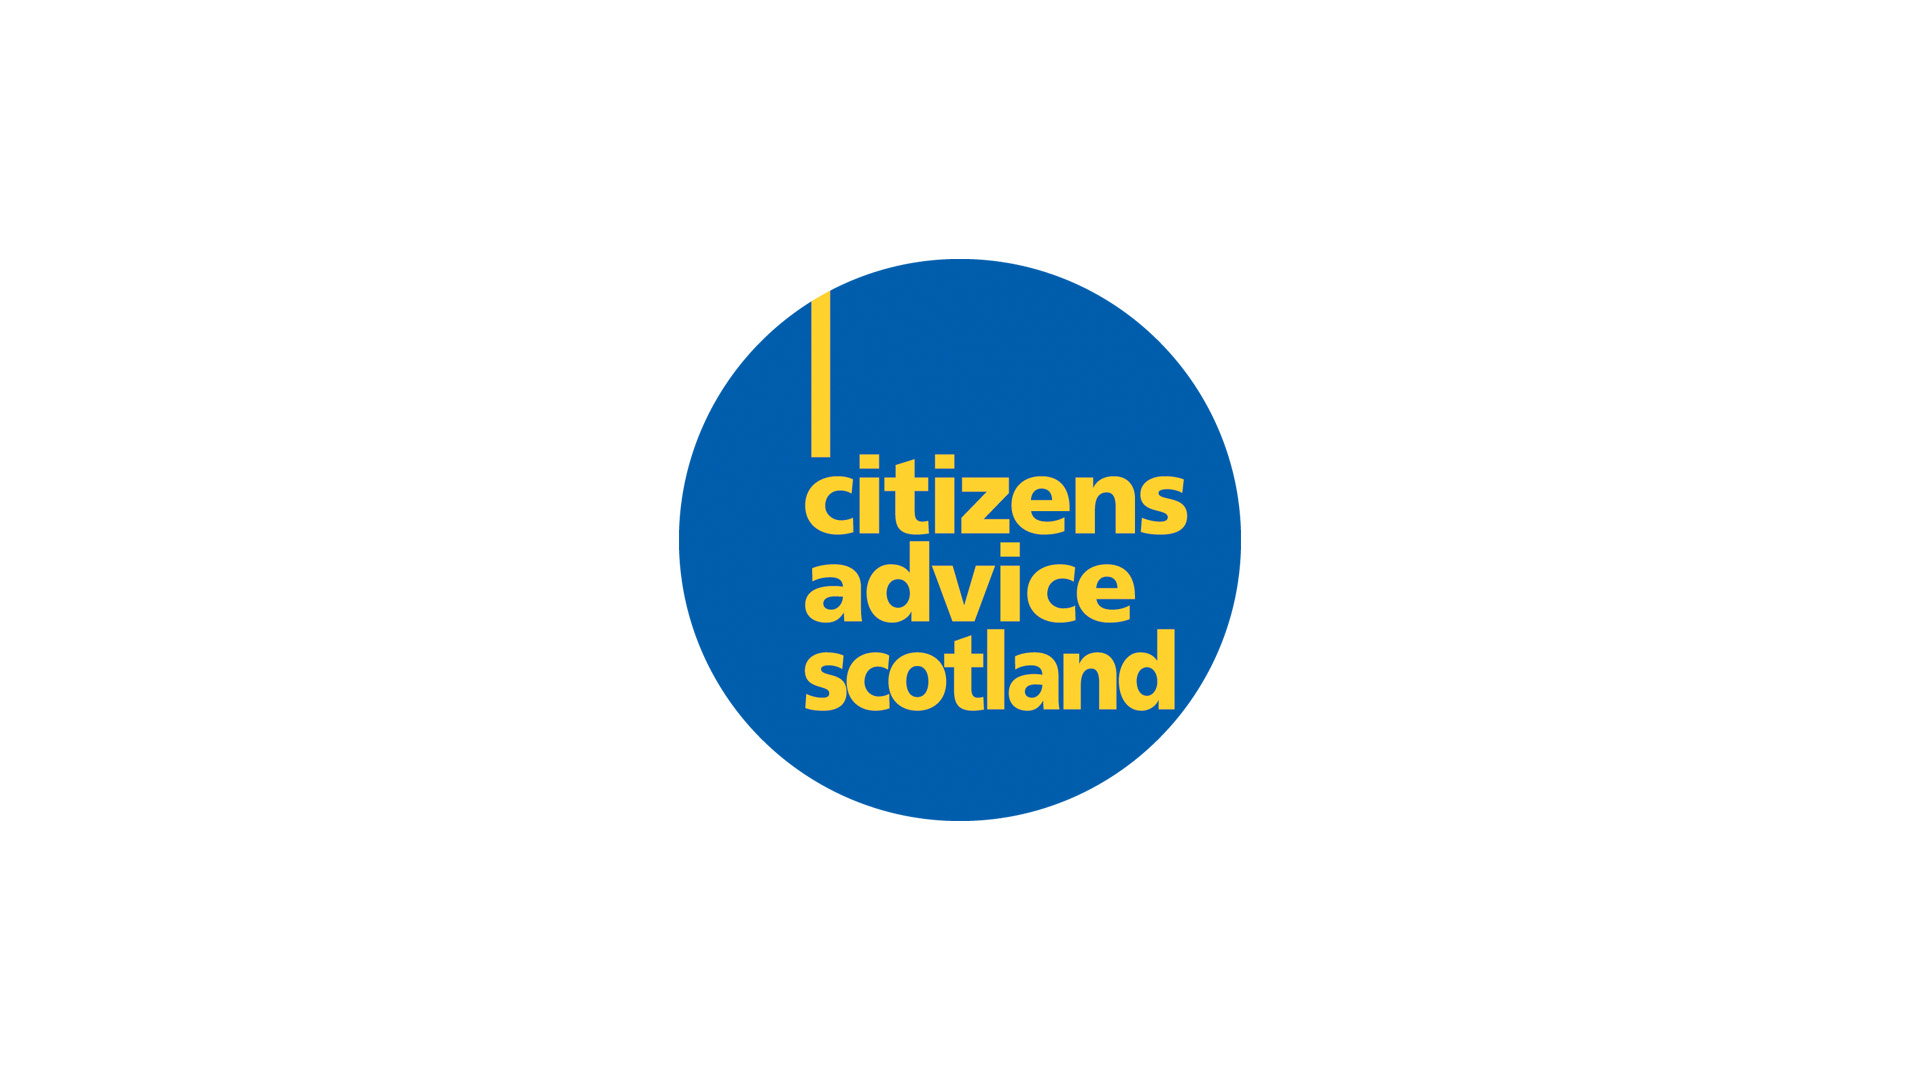 Citizens advice Scotland logo